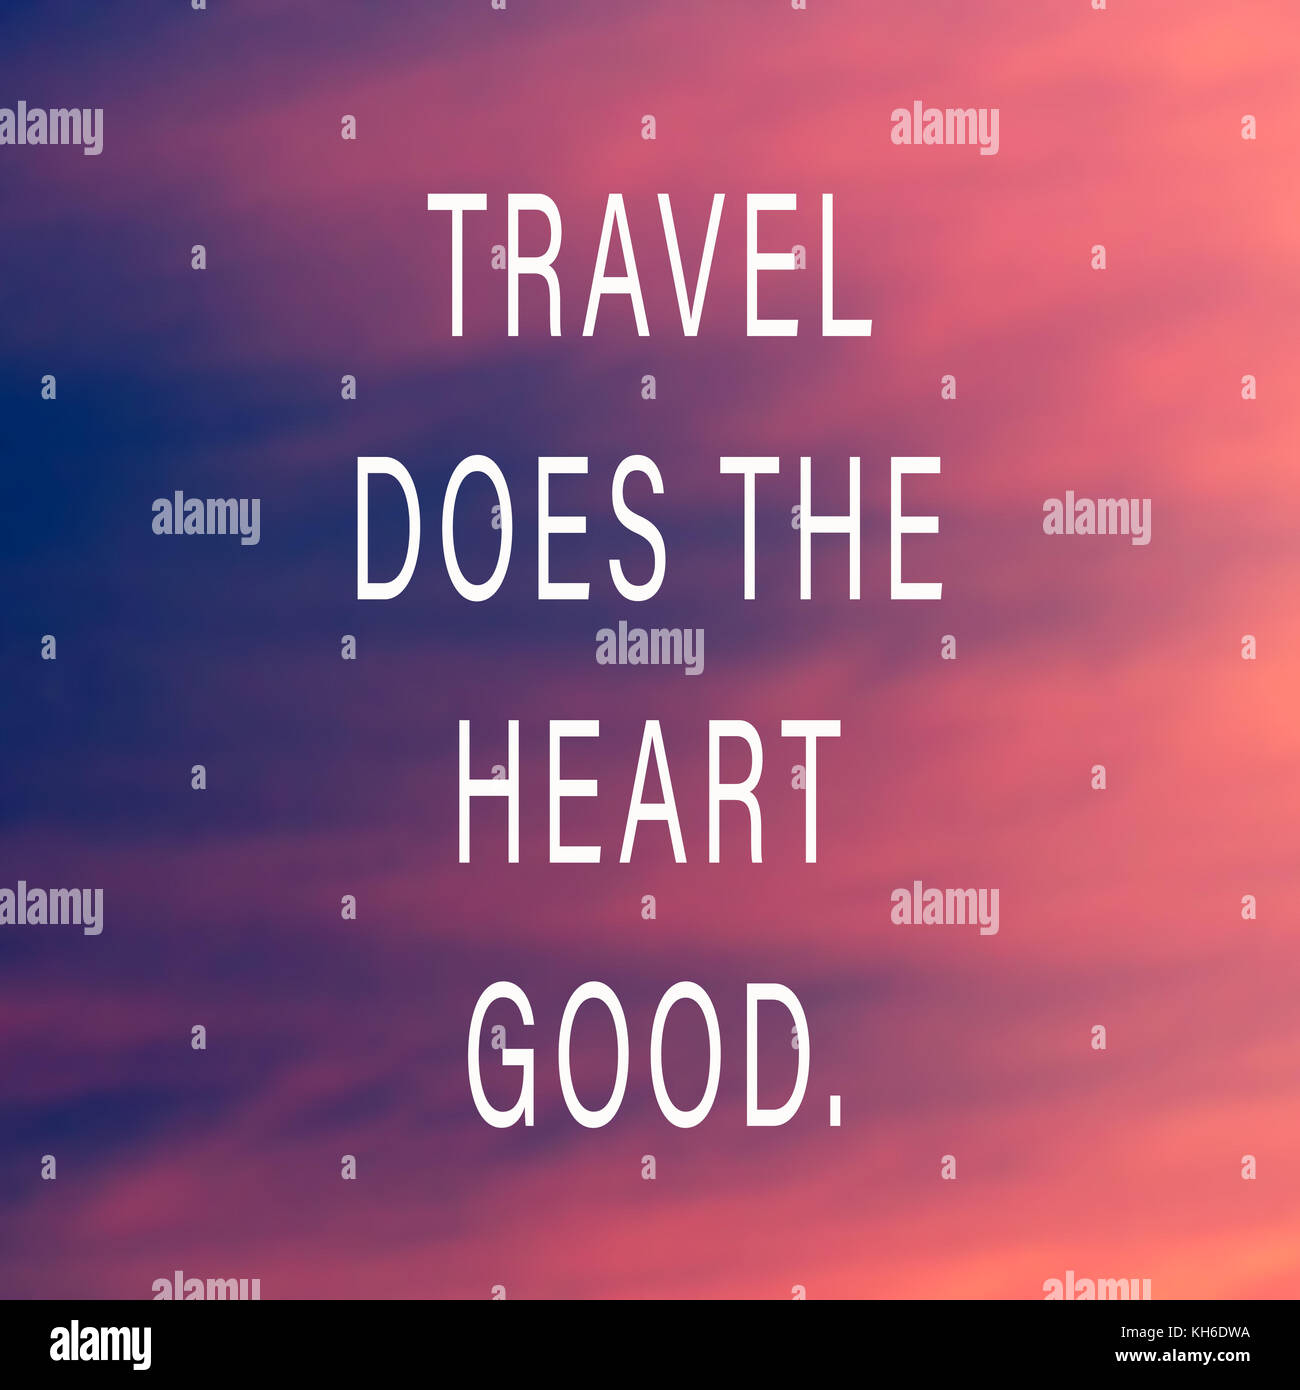 Travel inspiration quote - Enjoy your journey. Stock Photo